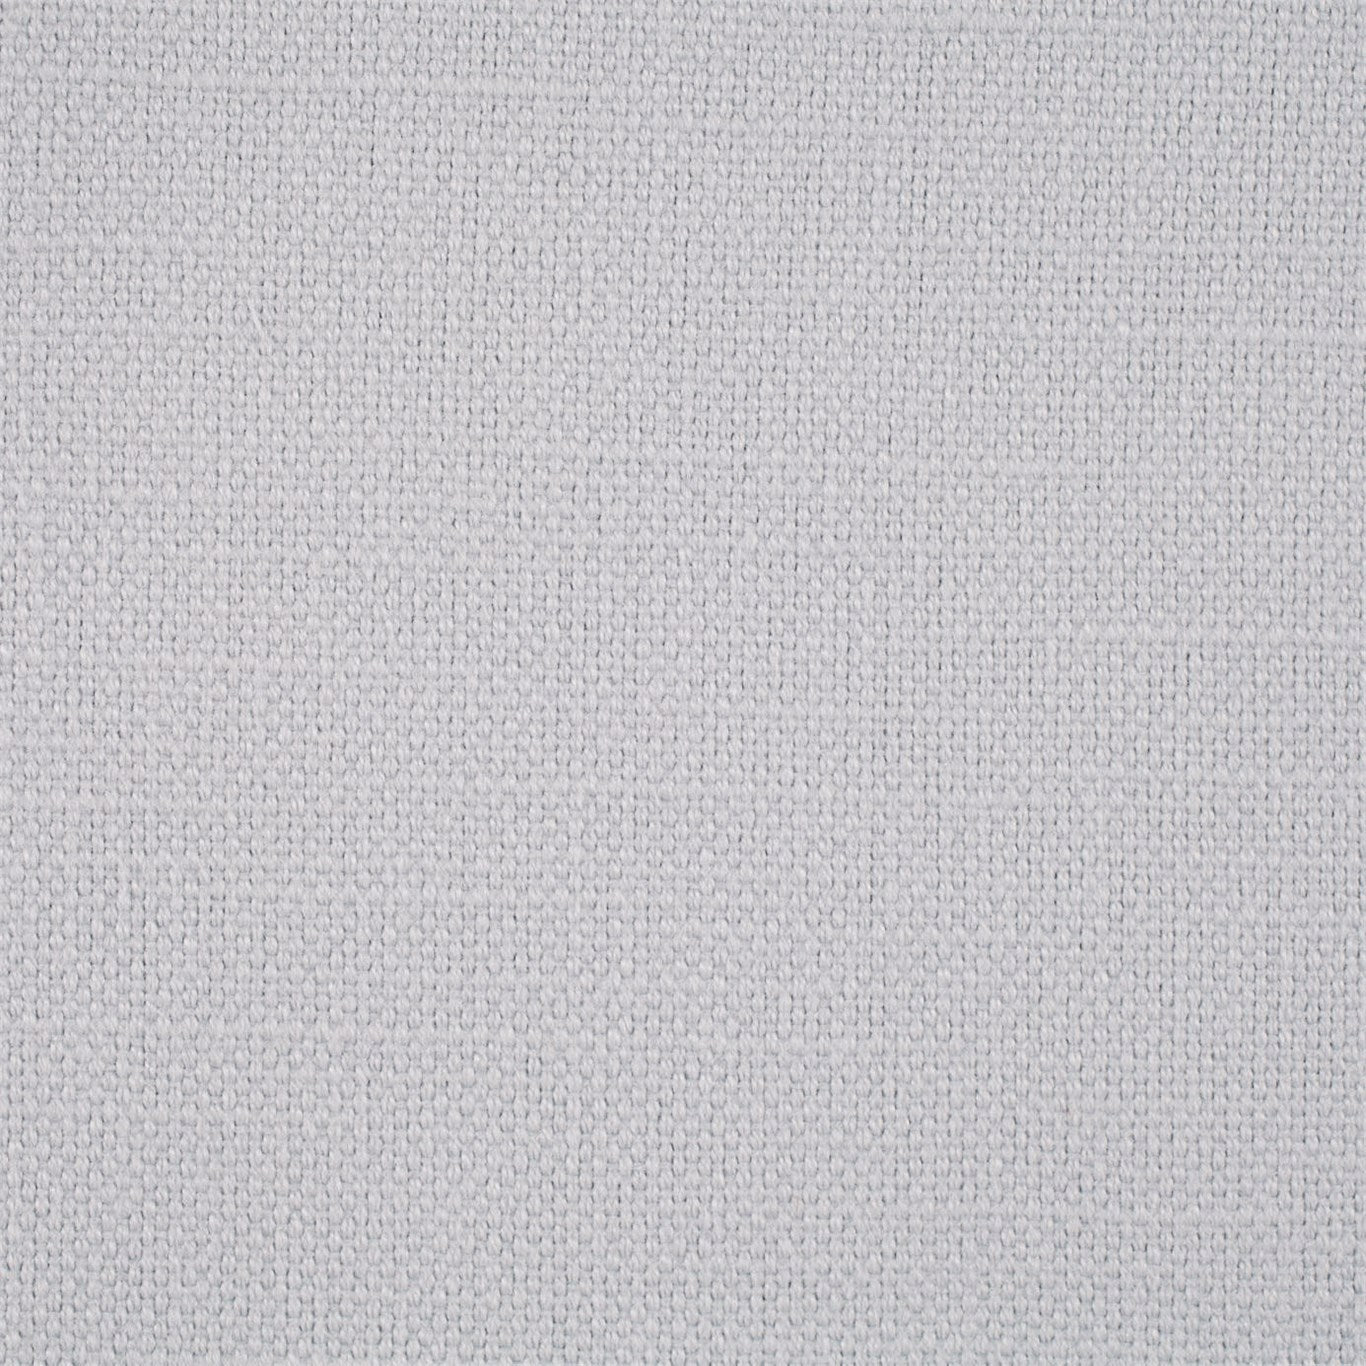 Arley Fabric by Sanderson - DALY245796 - Silver